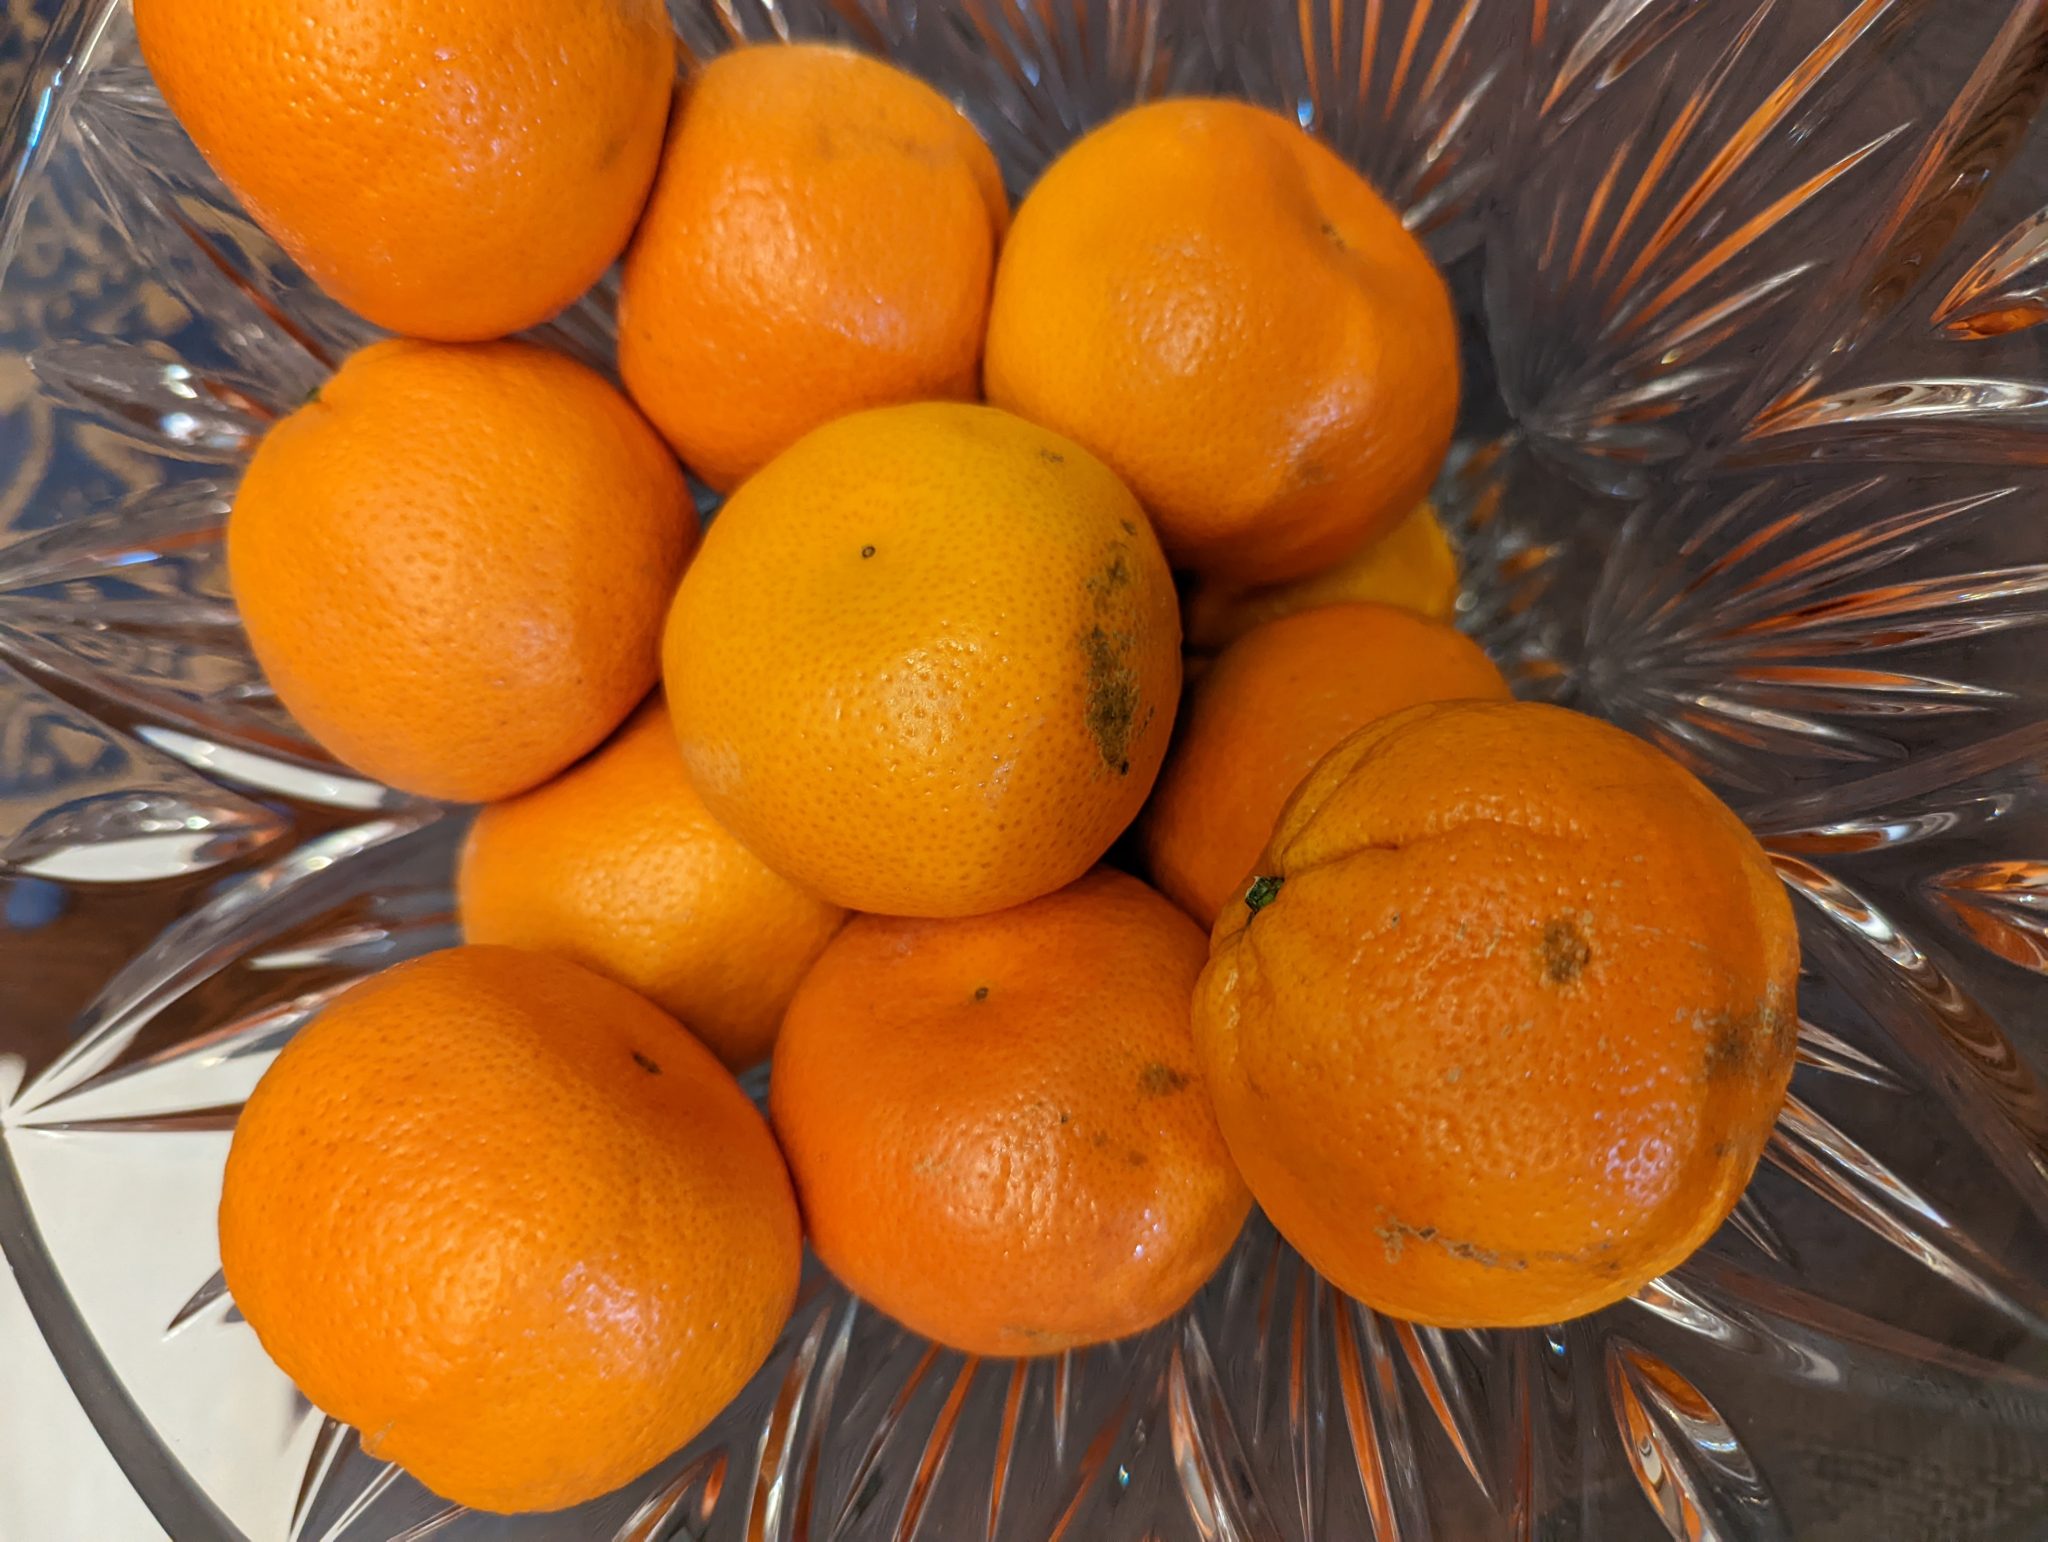 A bowel of small oranges.